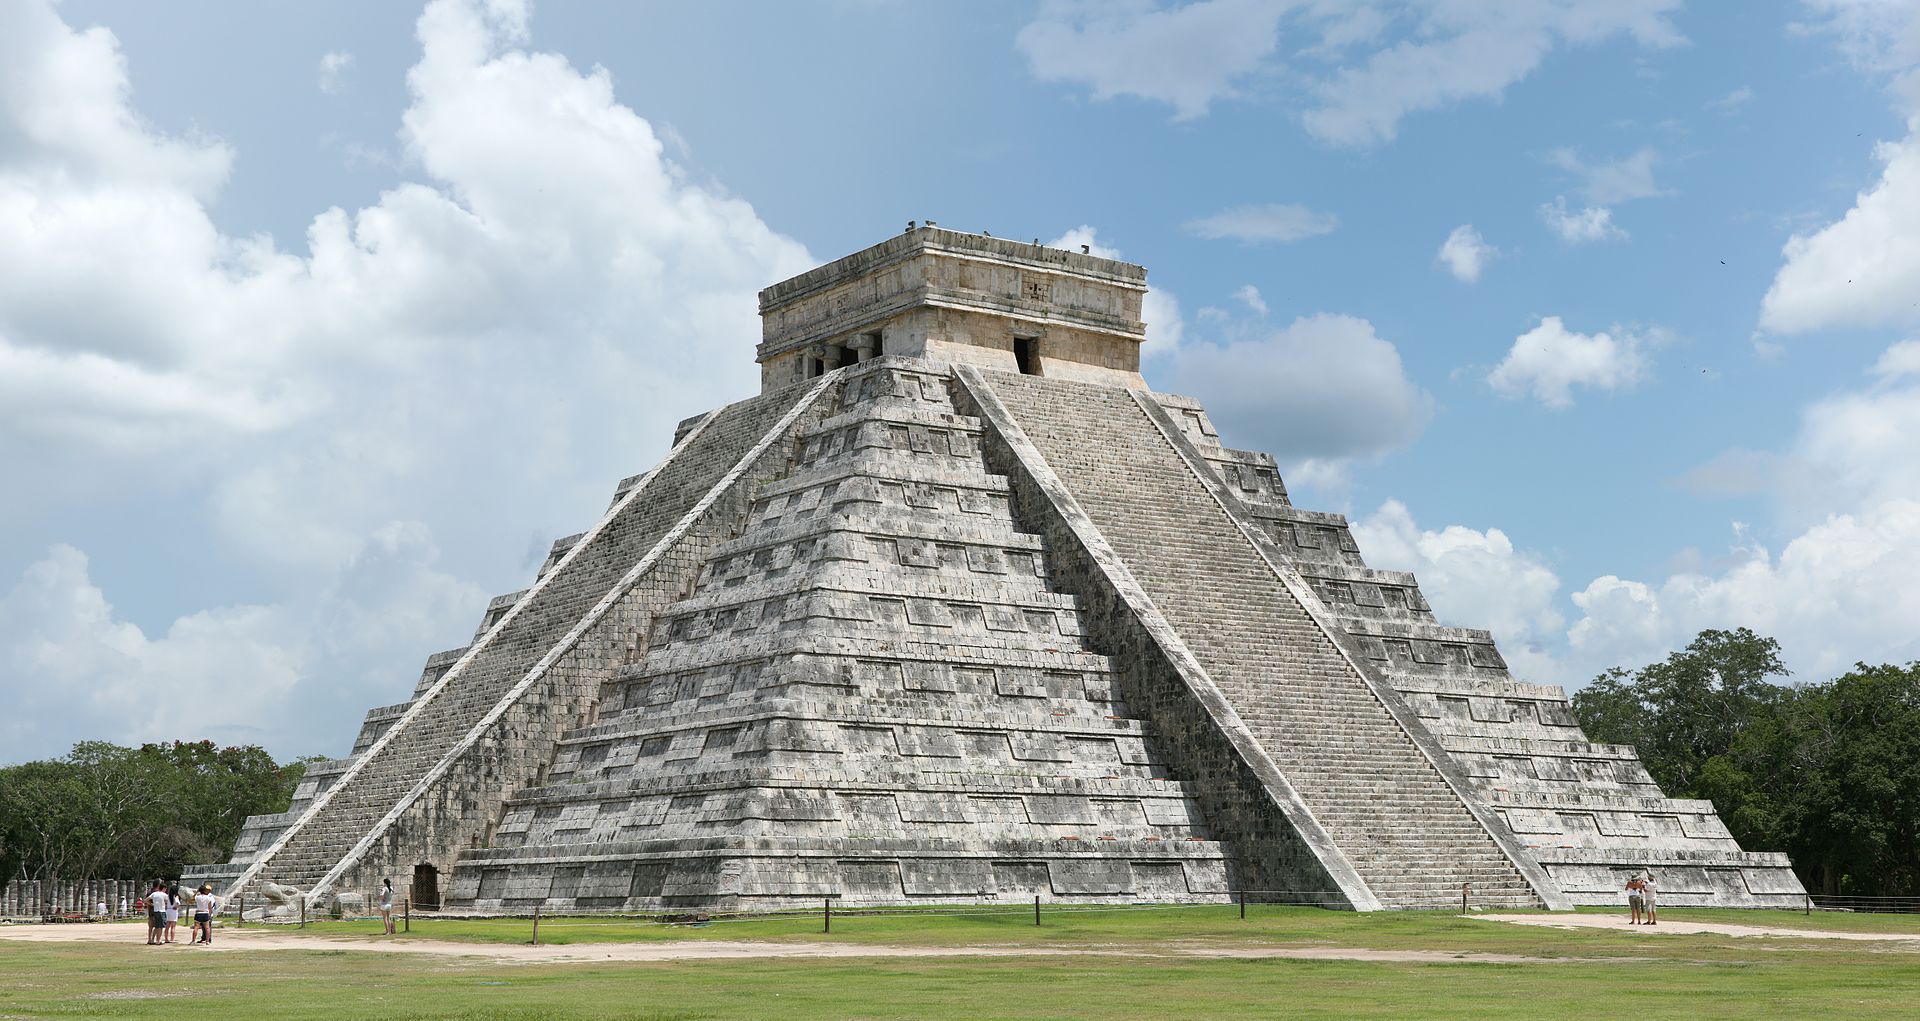 The Pyramids in Latin America